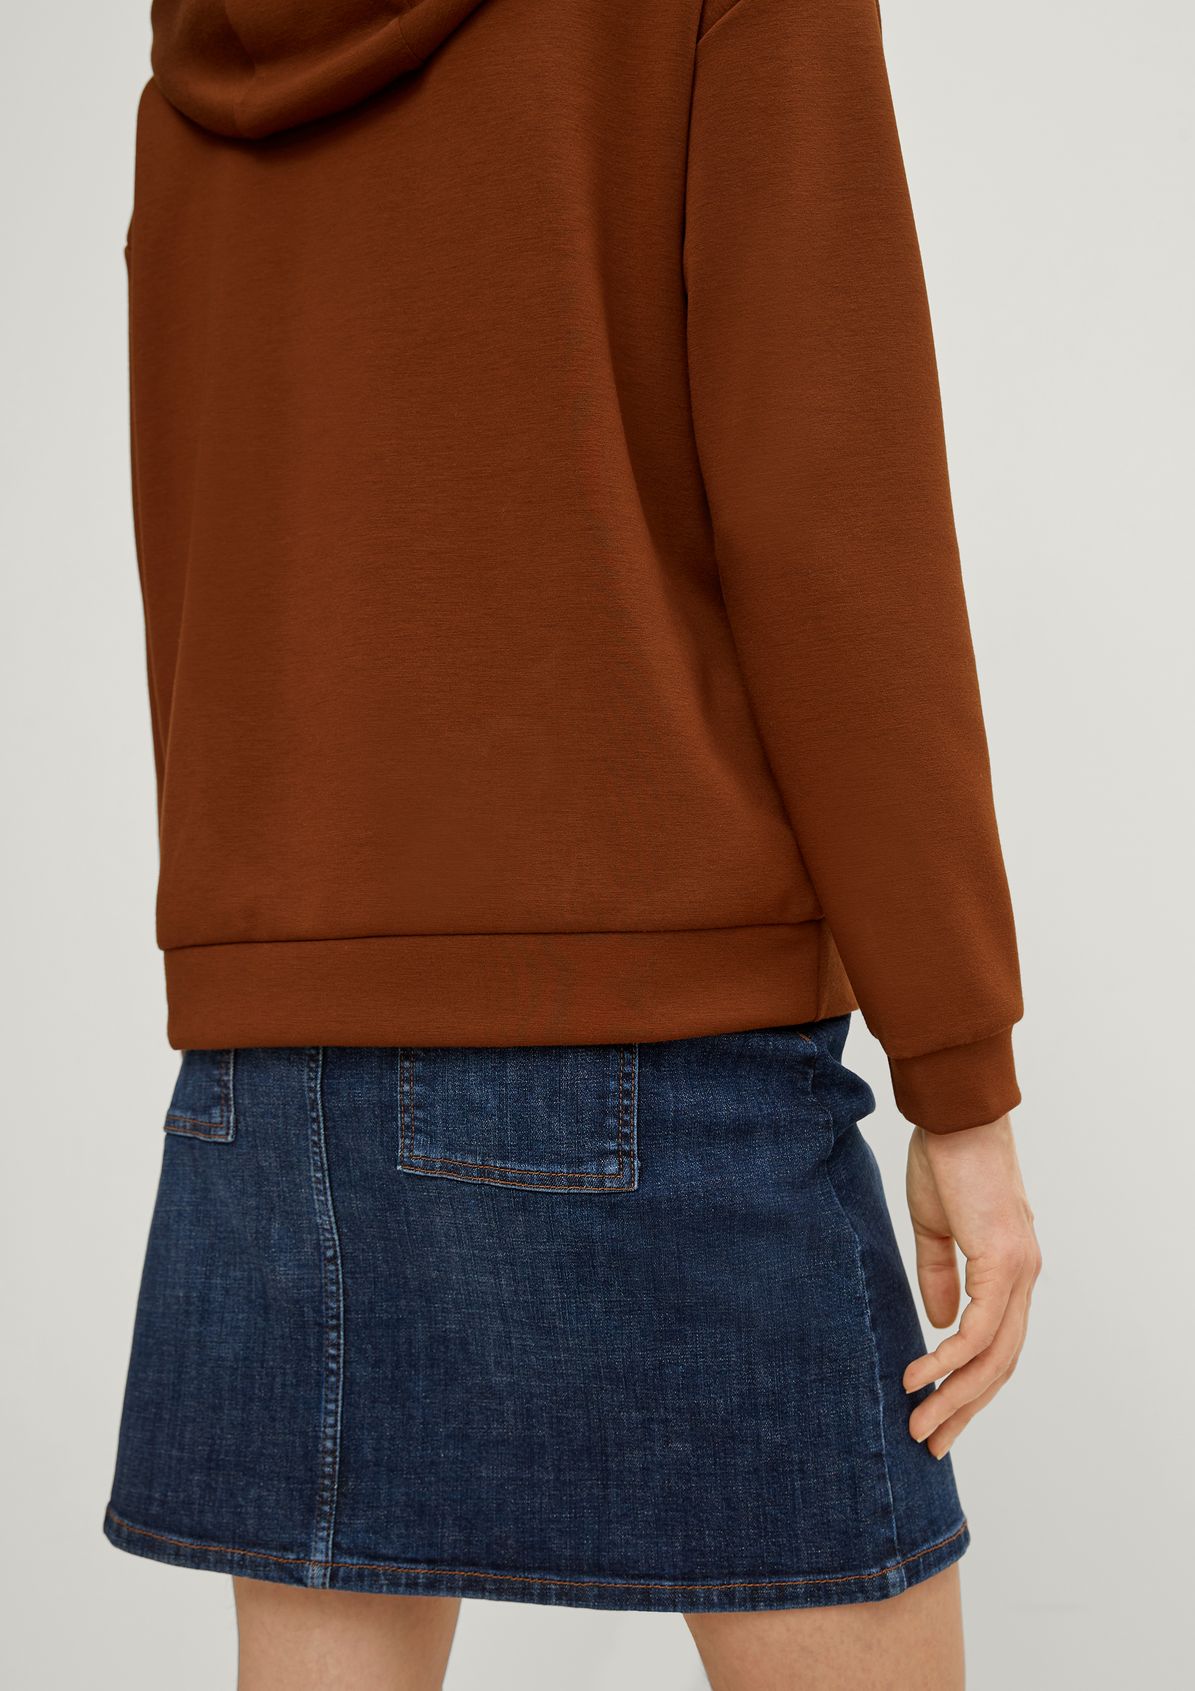 Modal blend hooded jumper from comma